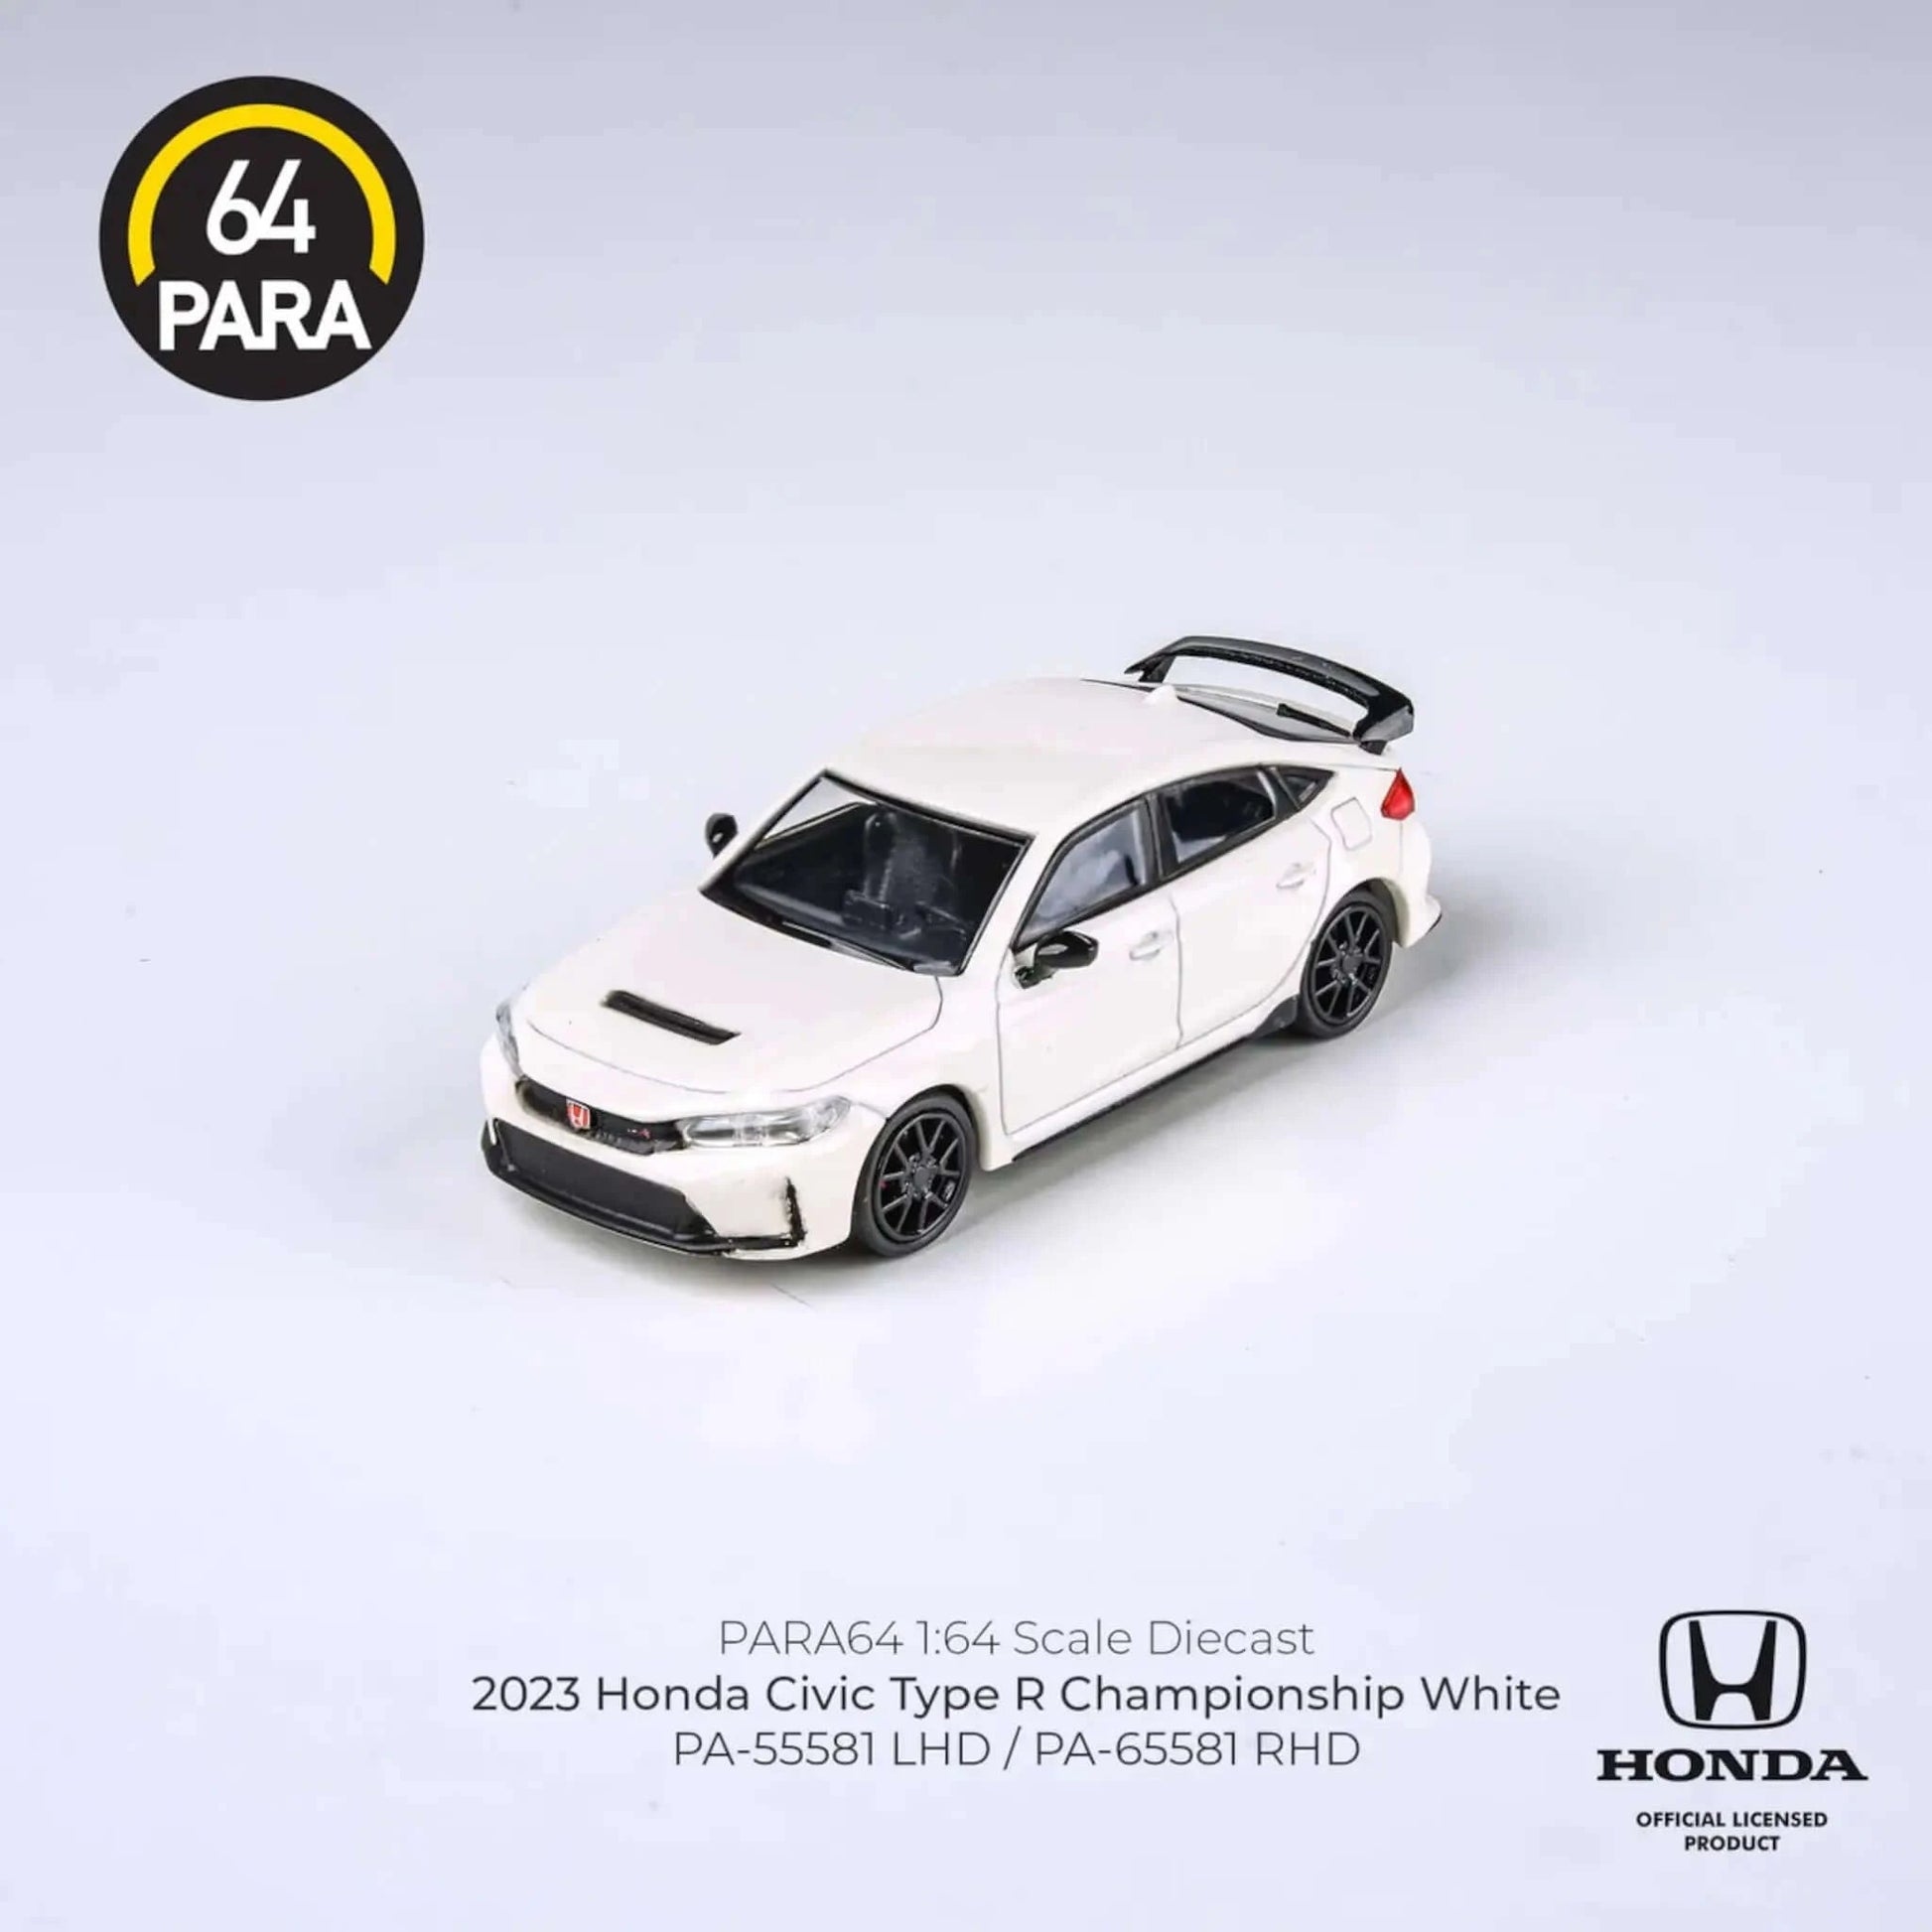 Honda Civic Type-R FL5 White Championship 2023 LHD Para64 1/64 - pa55581lhd